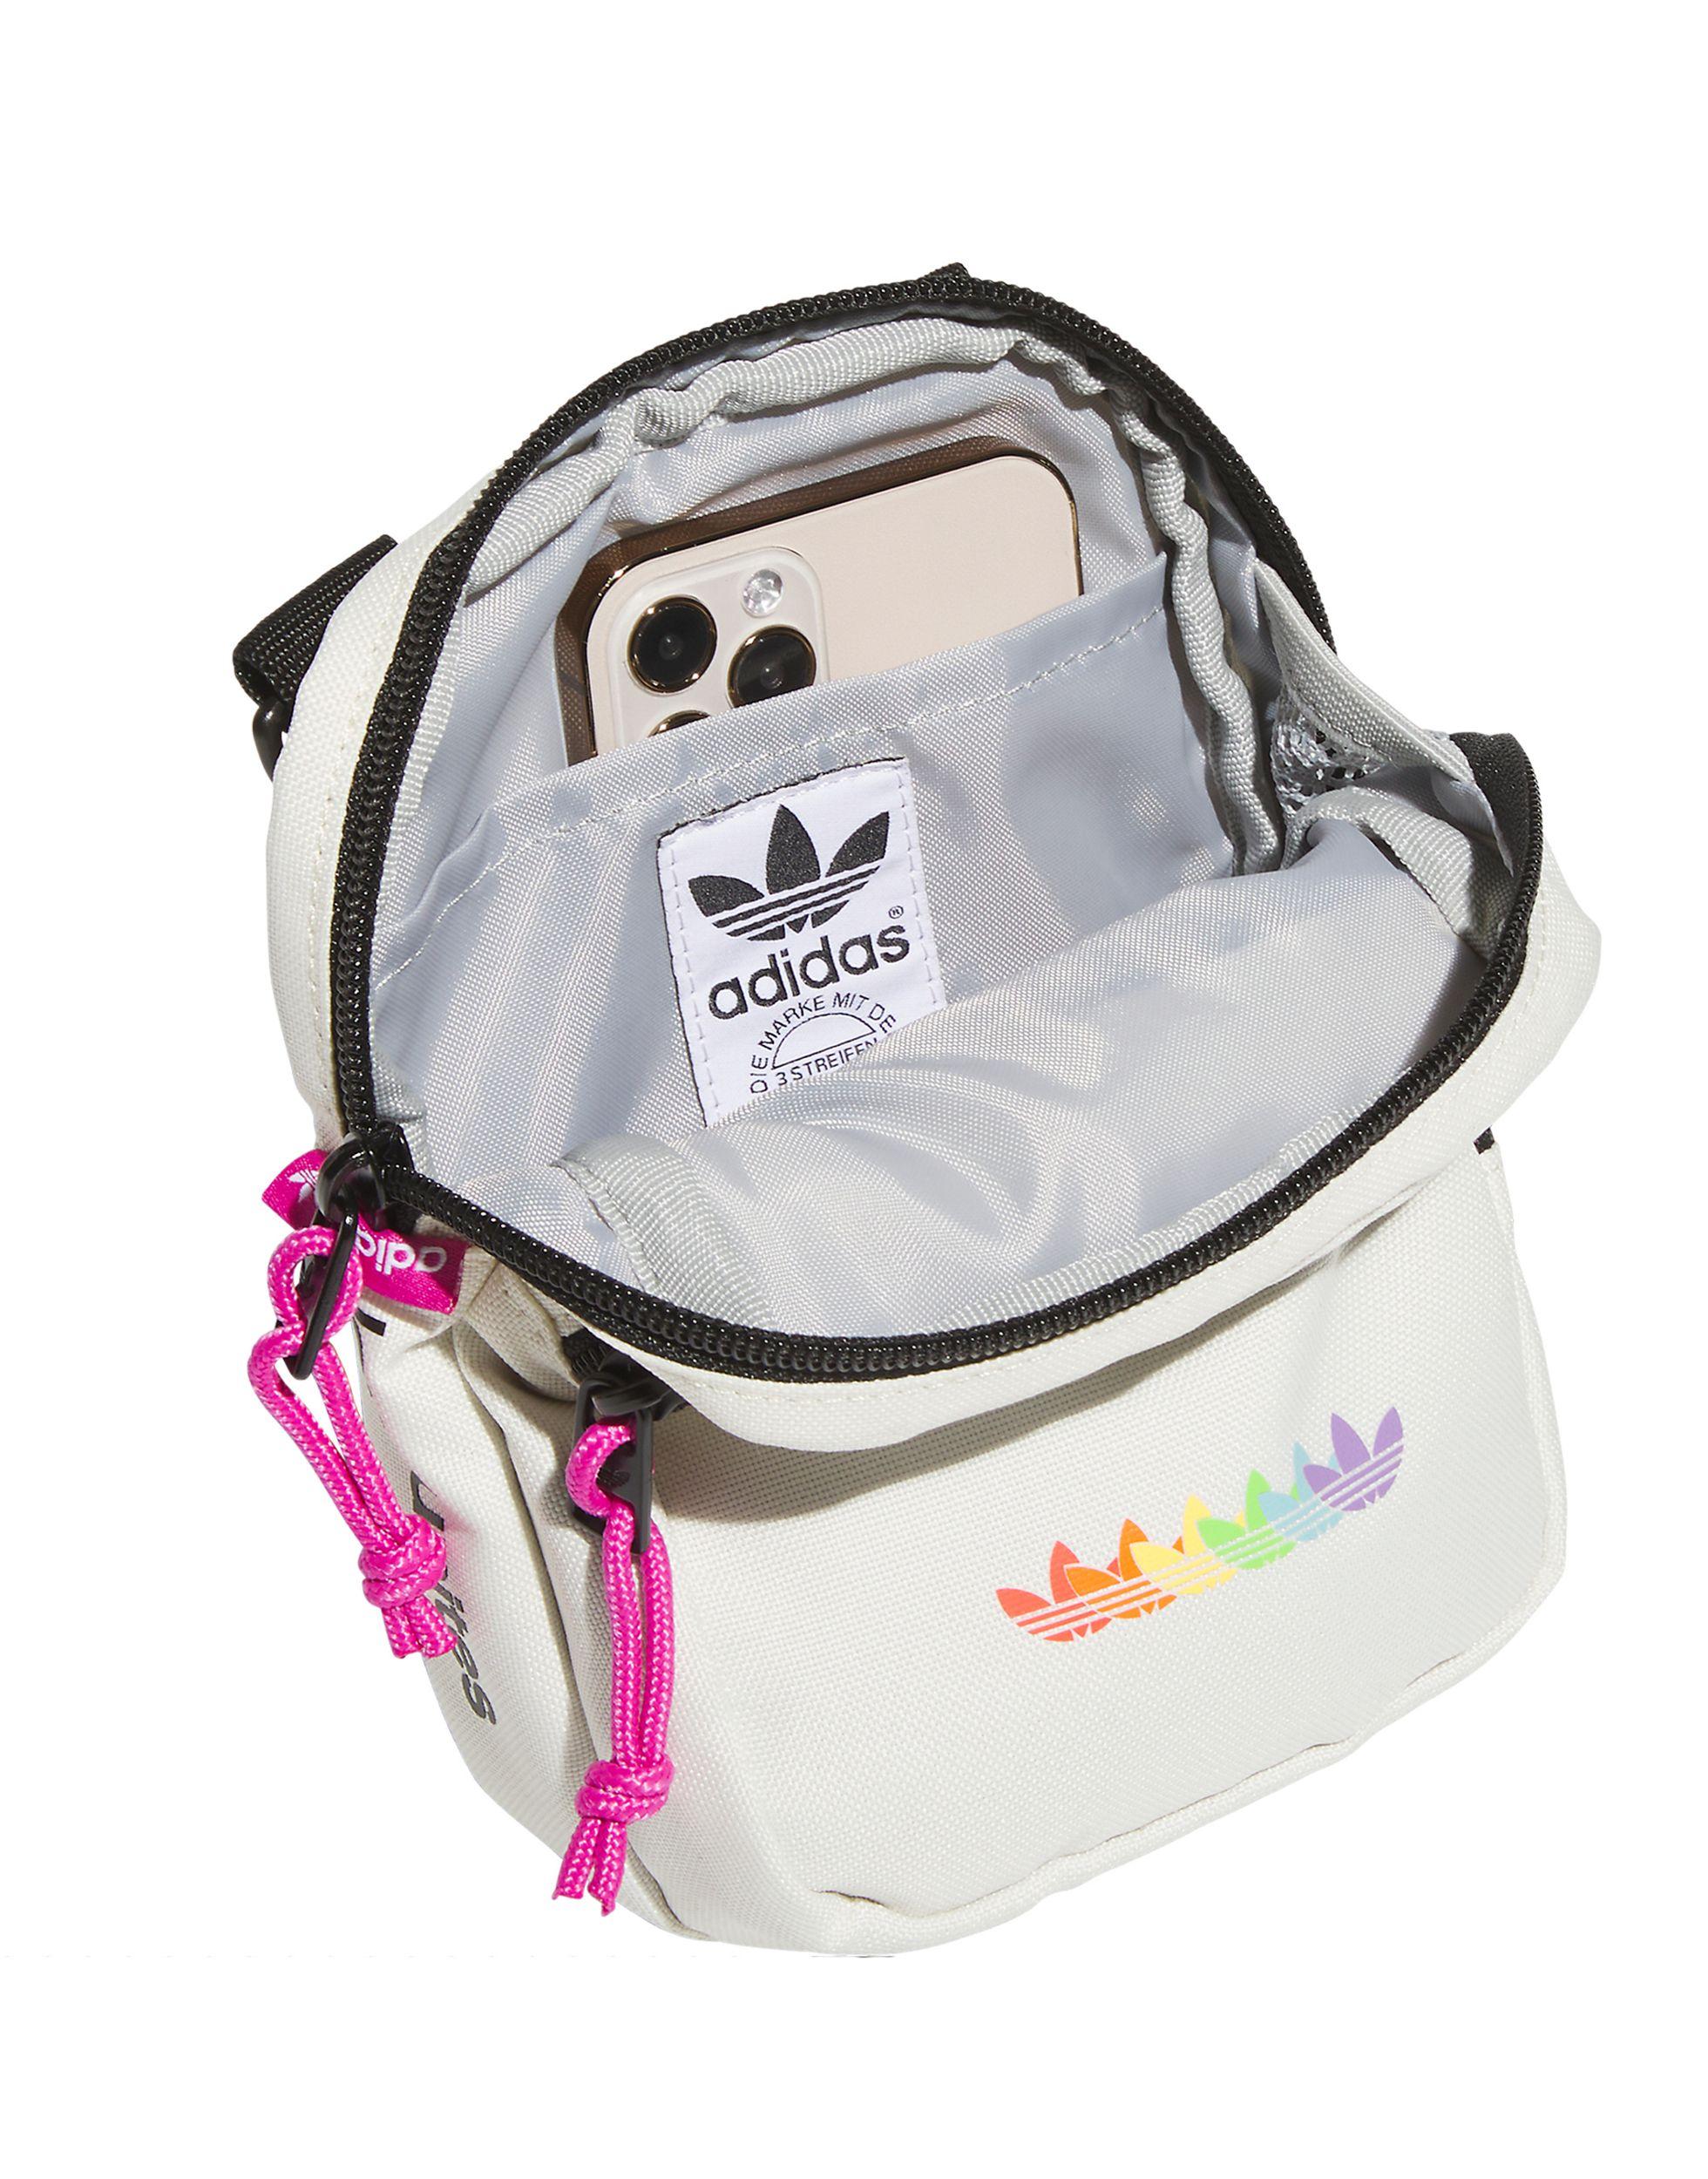 adidas Originals Pride Utility 3.0 Festival Crossbody Bag in White | Lyst